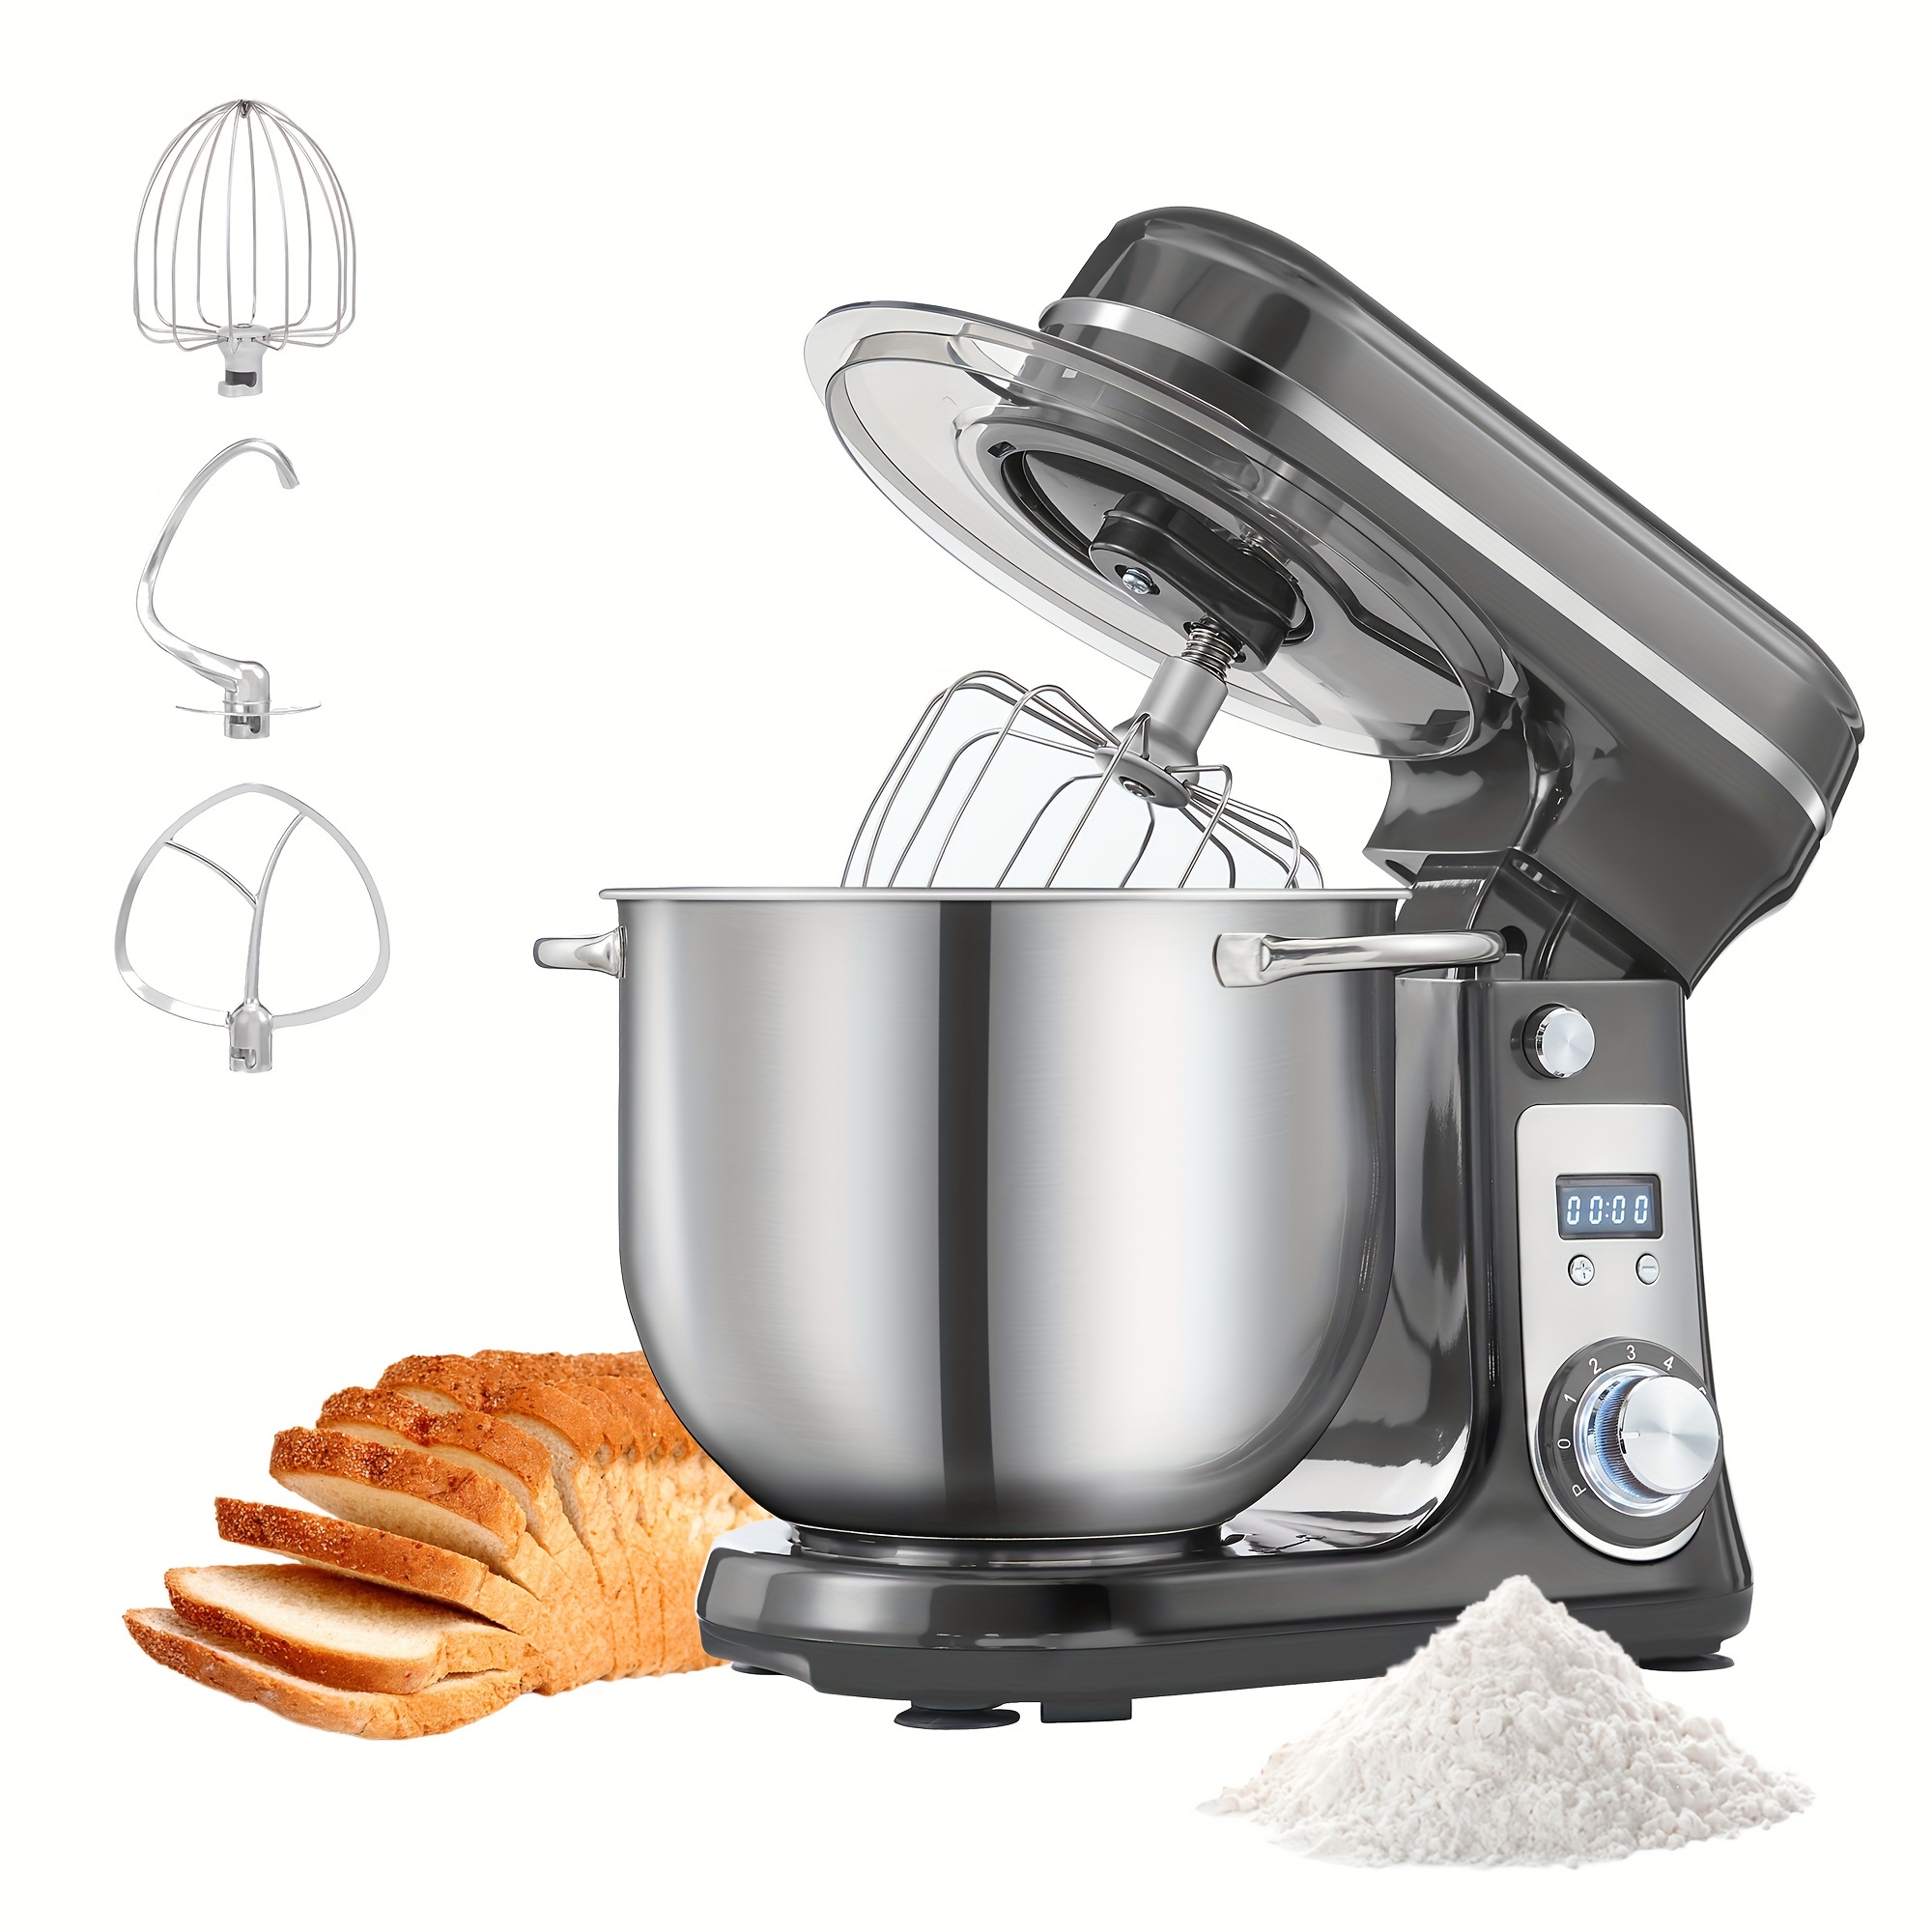 biolomix 6l 1200w dc quiet motor 6 speed kitchen food processors stand mixer cream egg whisk whip dough kneader blender